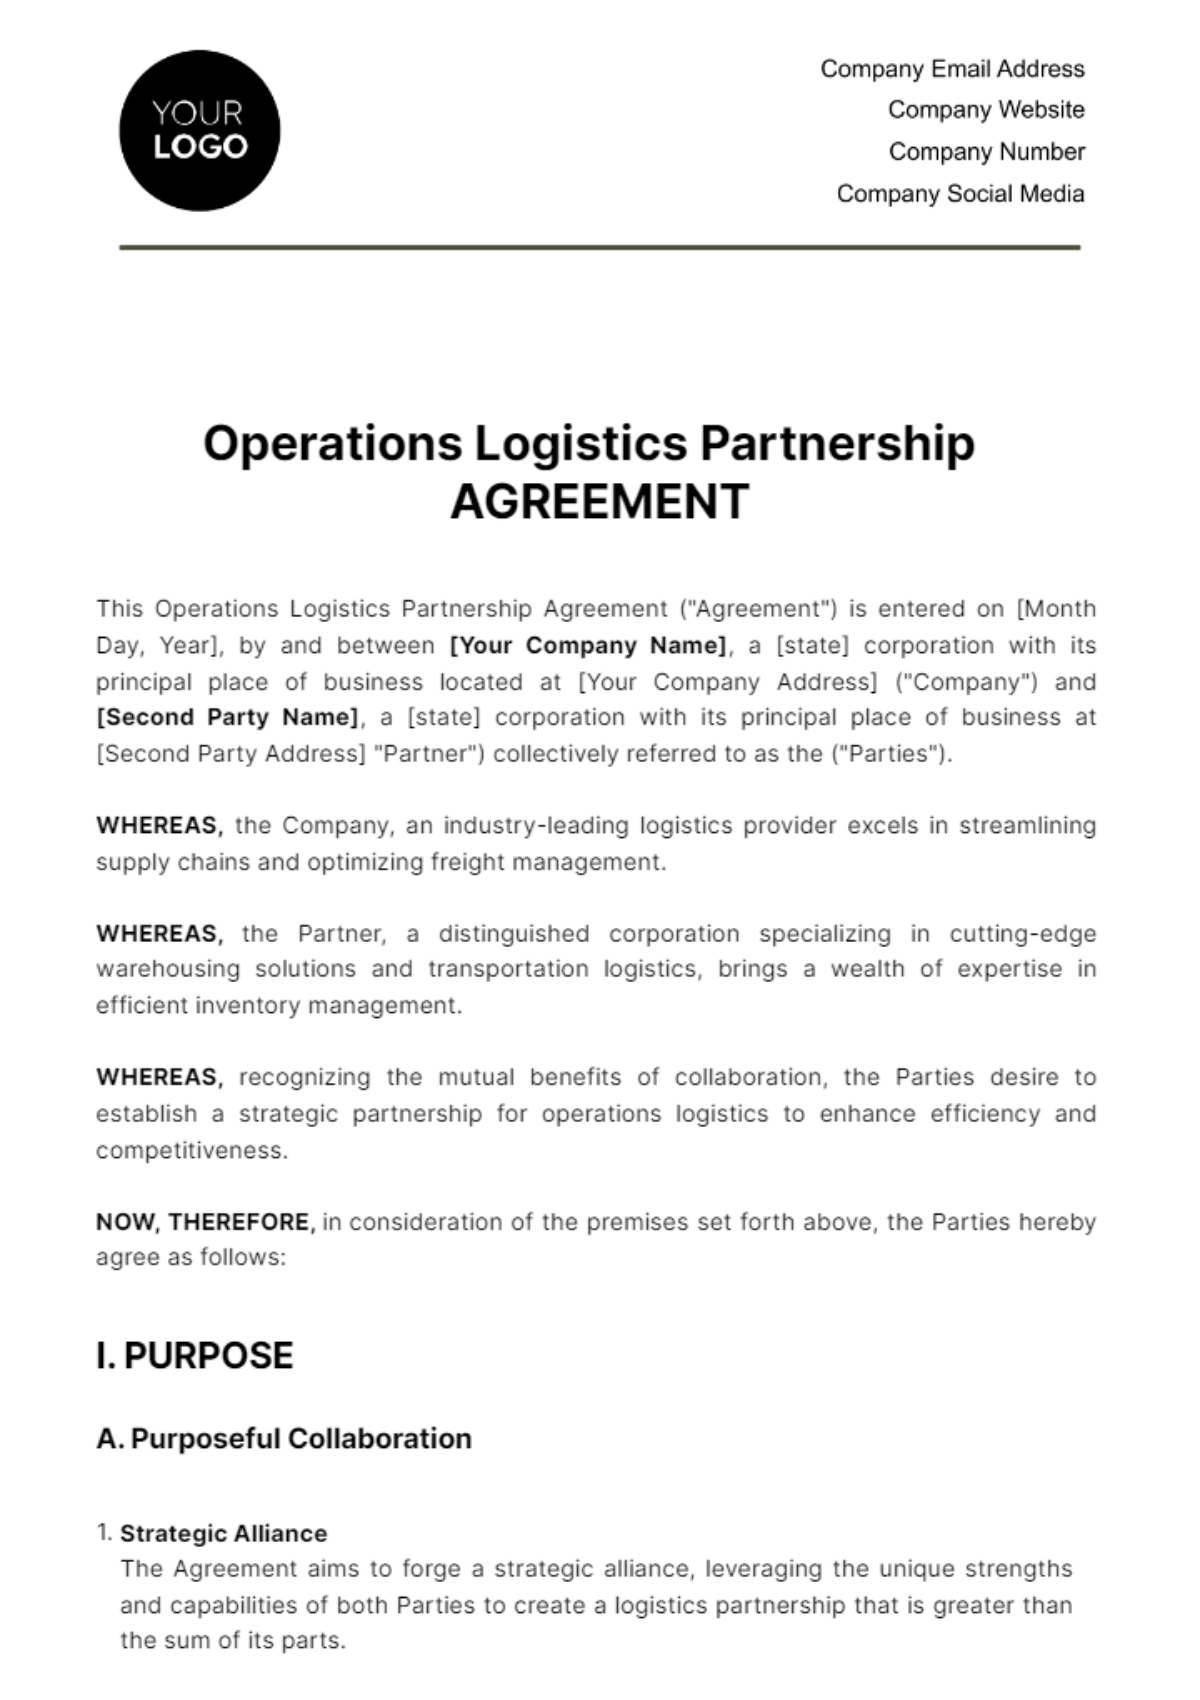 Operations Logistics Partnership Agreement Template